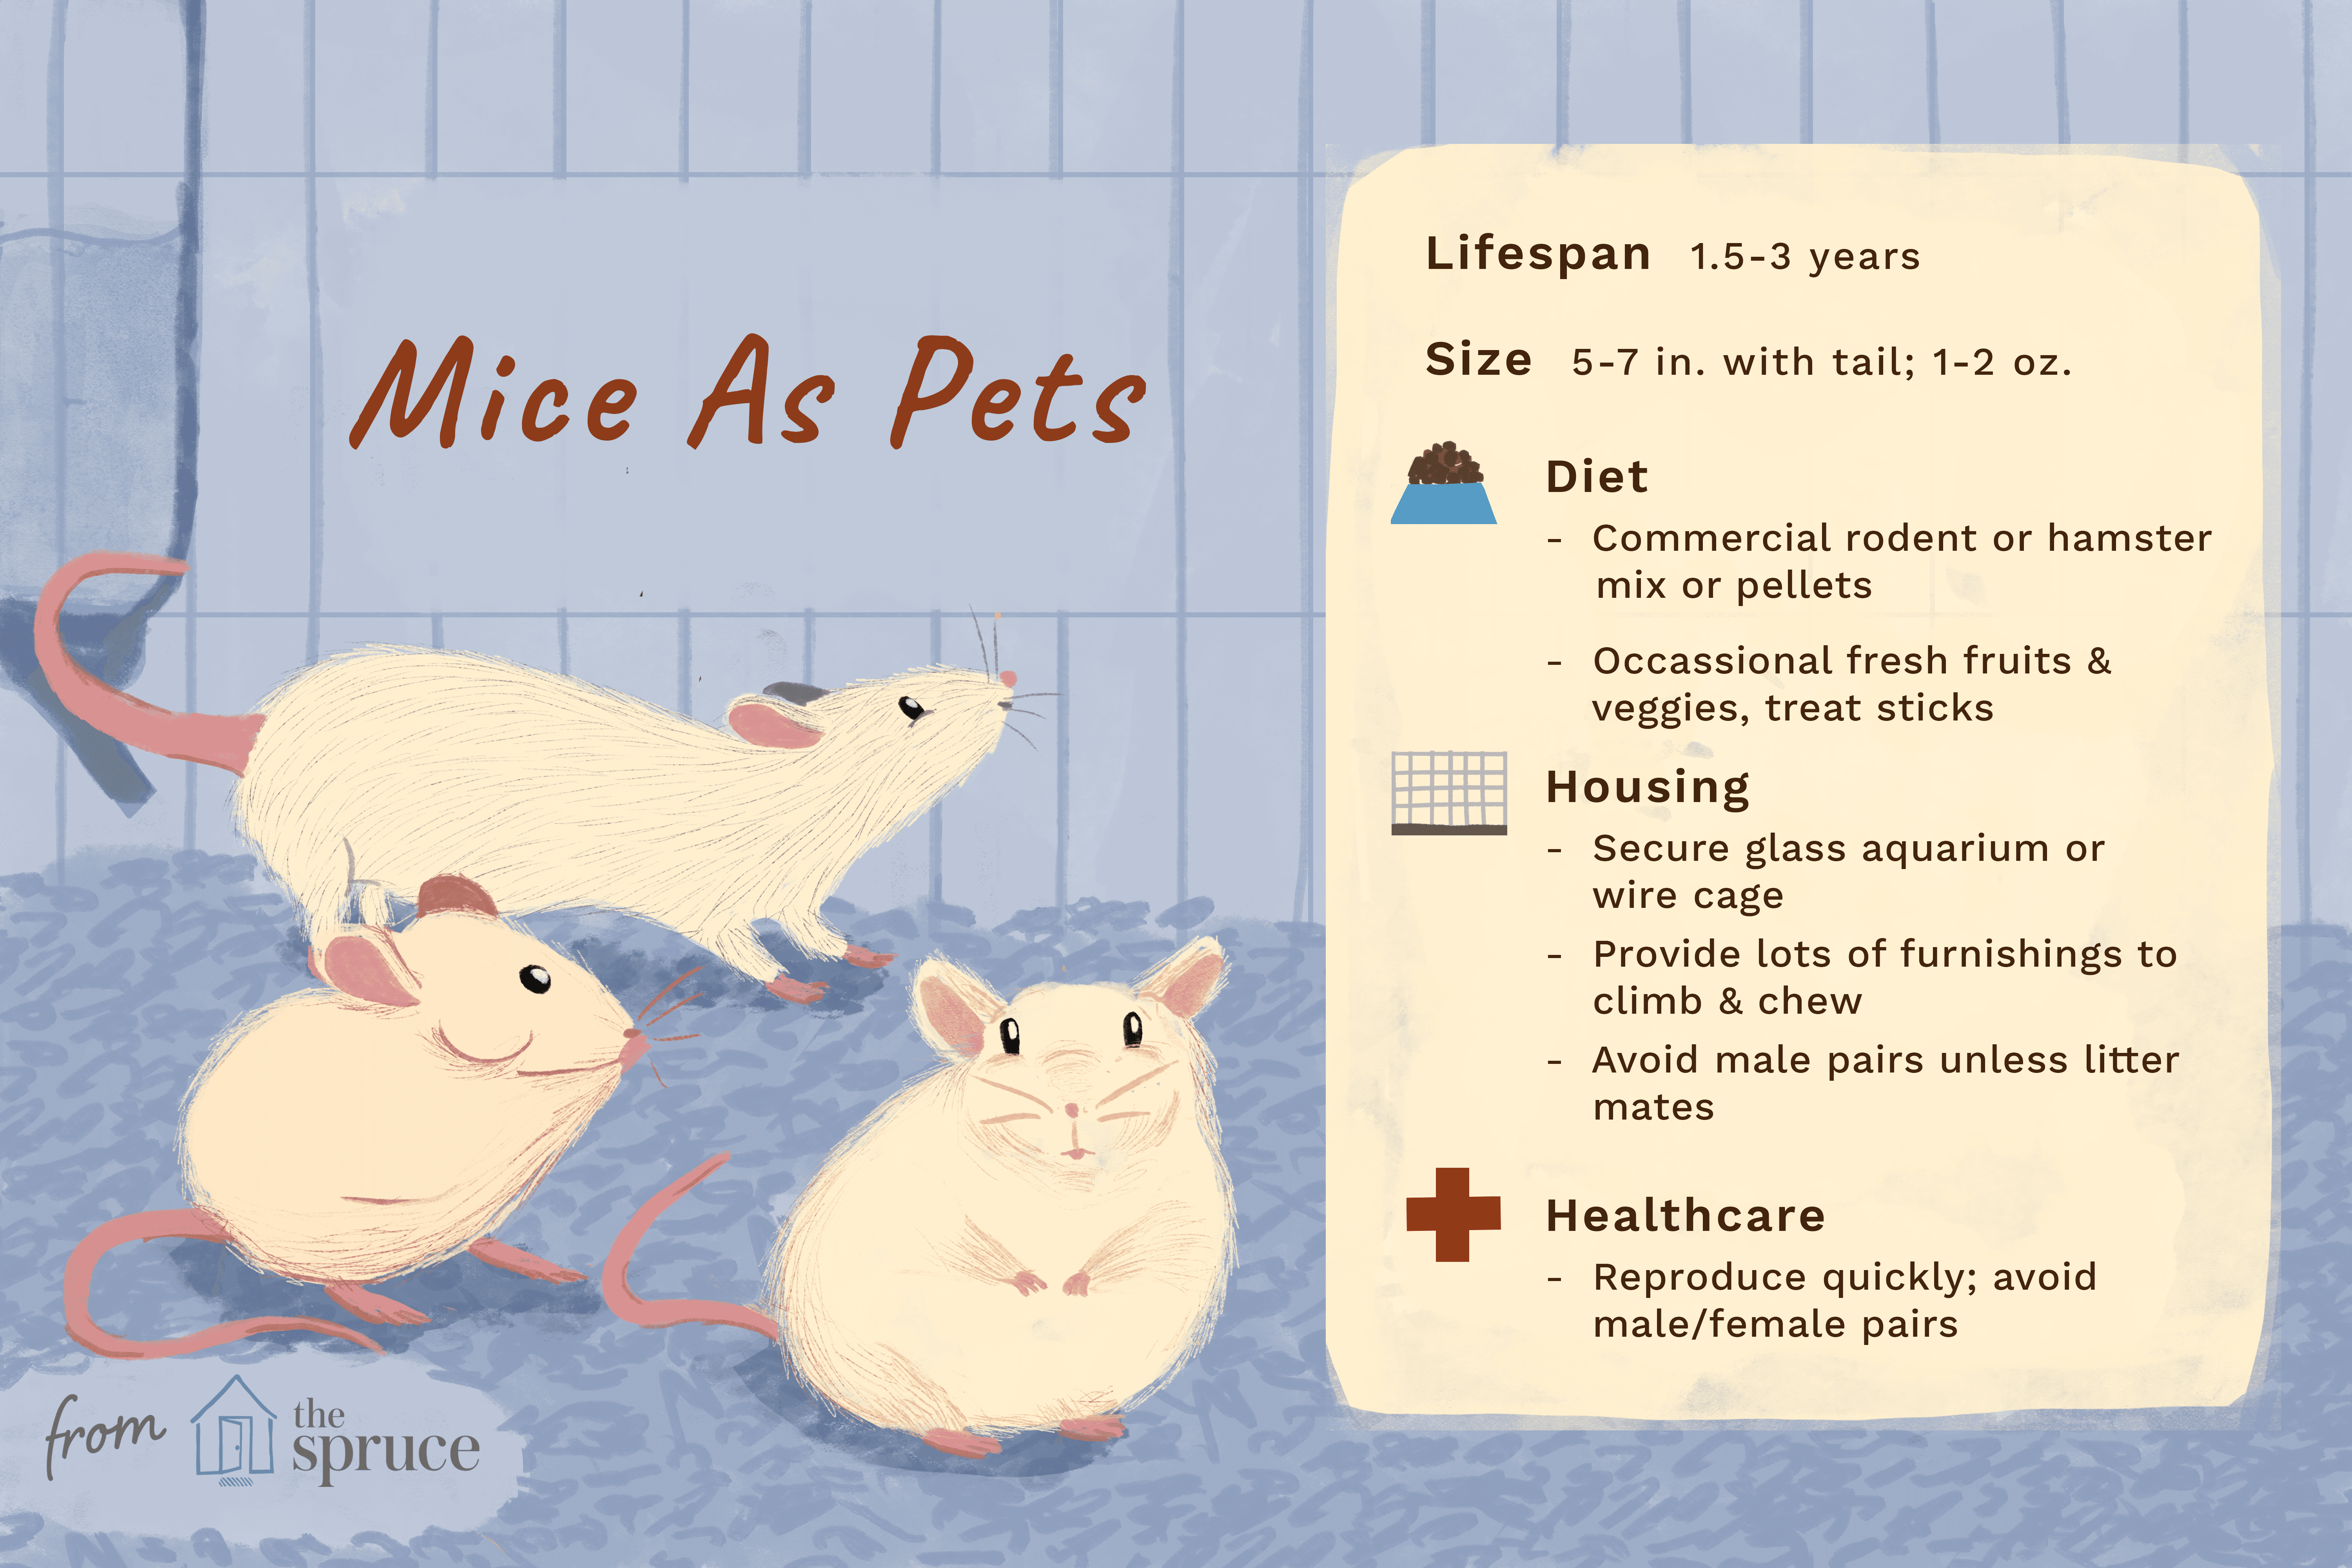 mice as pets: care sheet